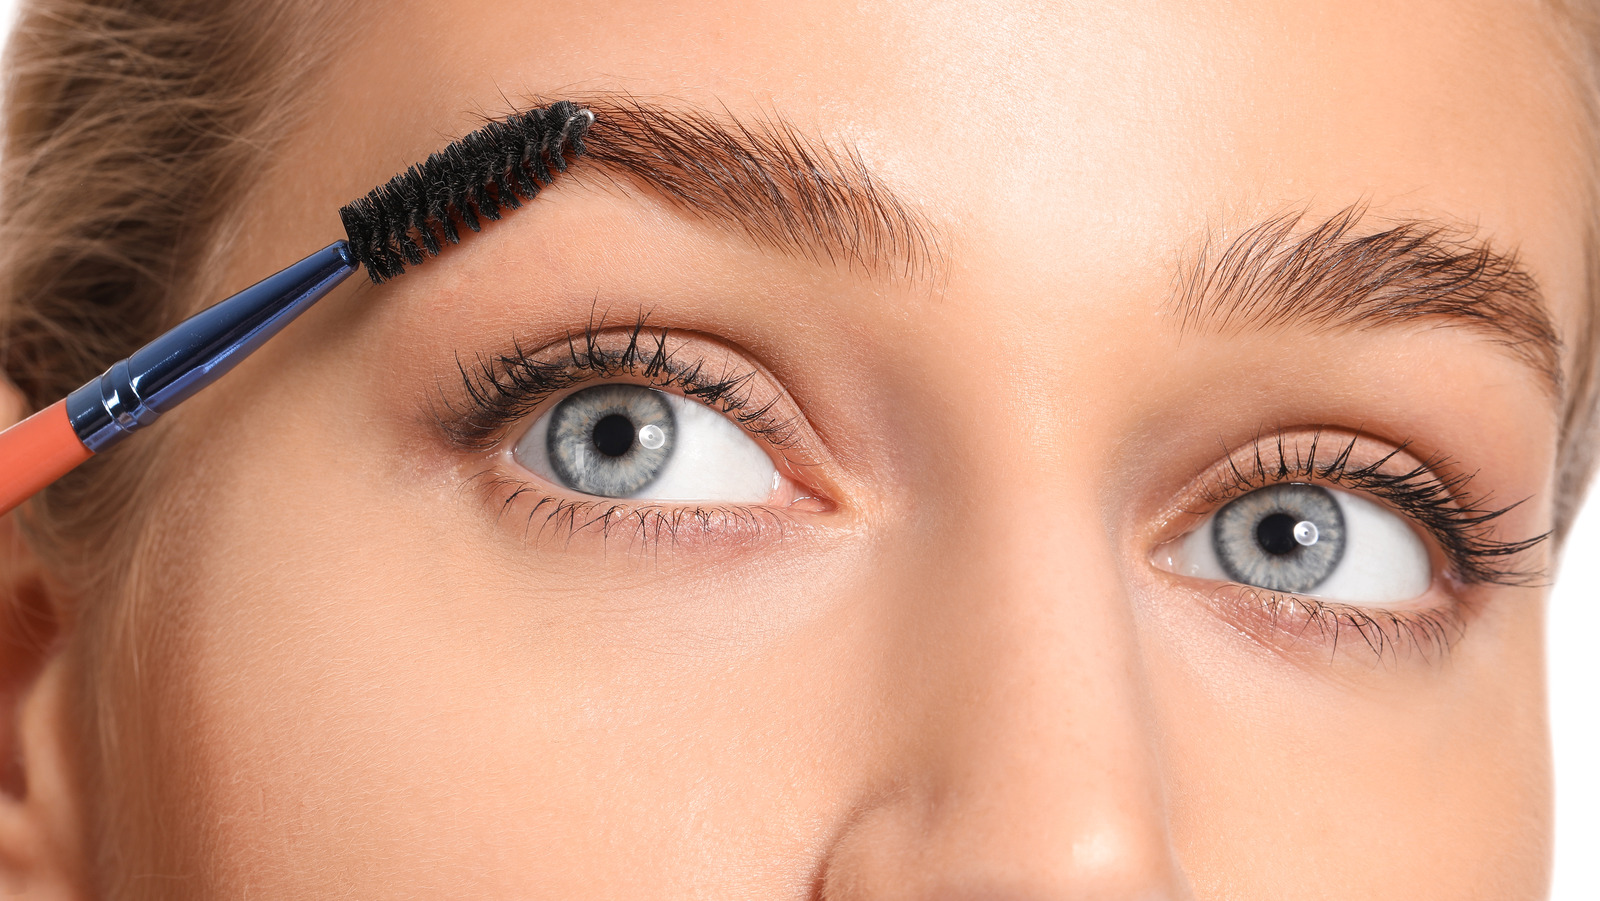 Can Vaseline Help With Eyebrow Growth?